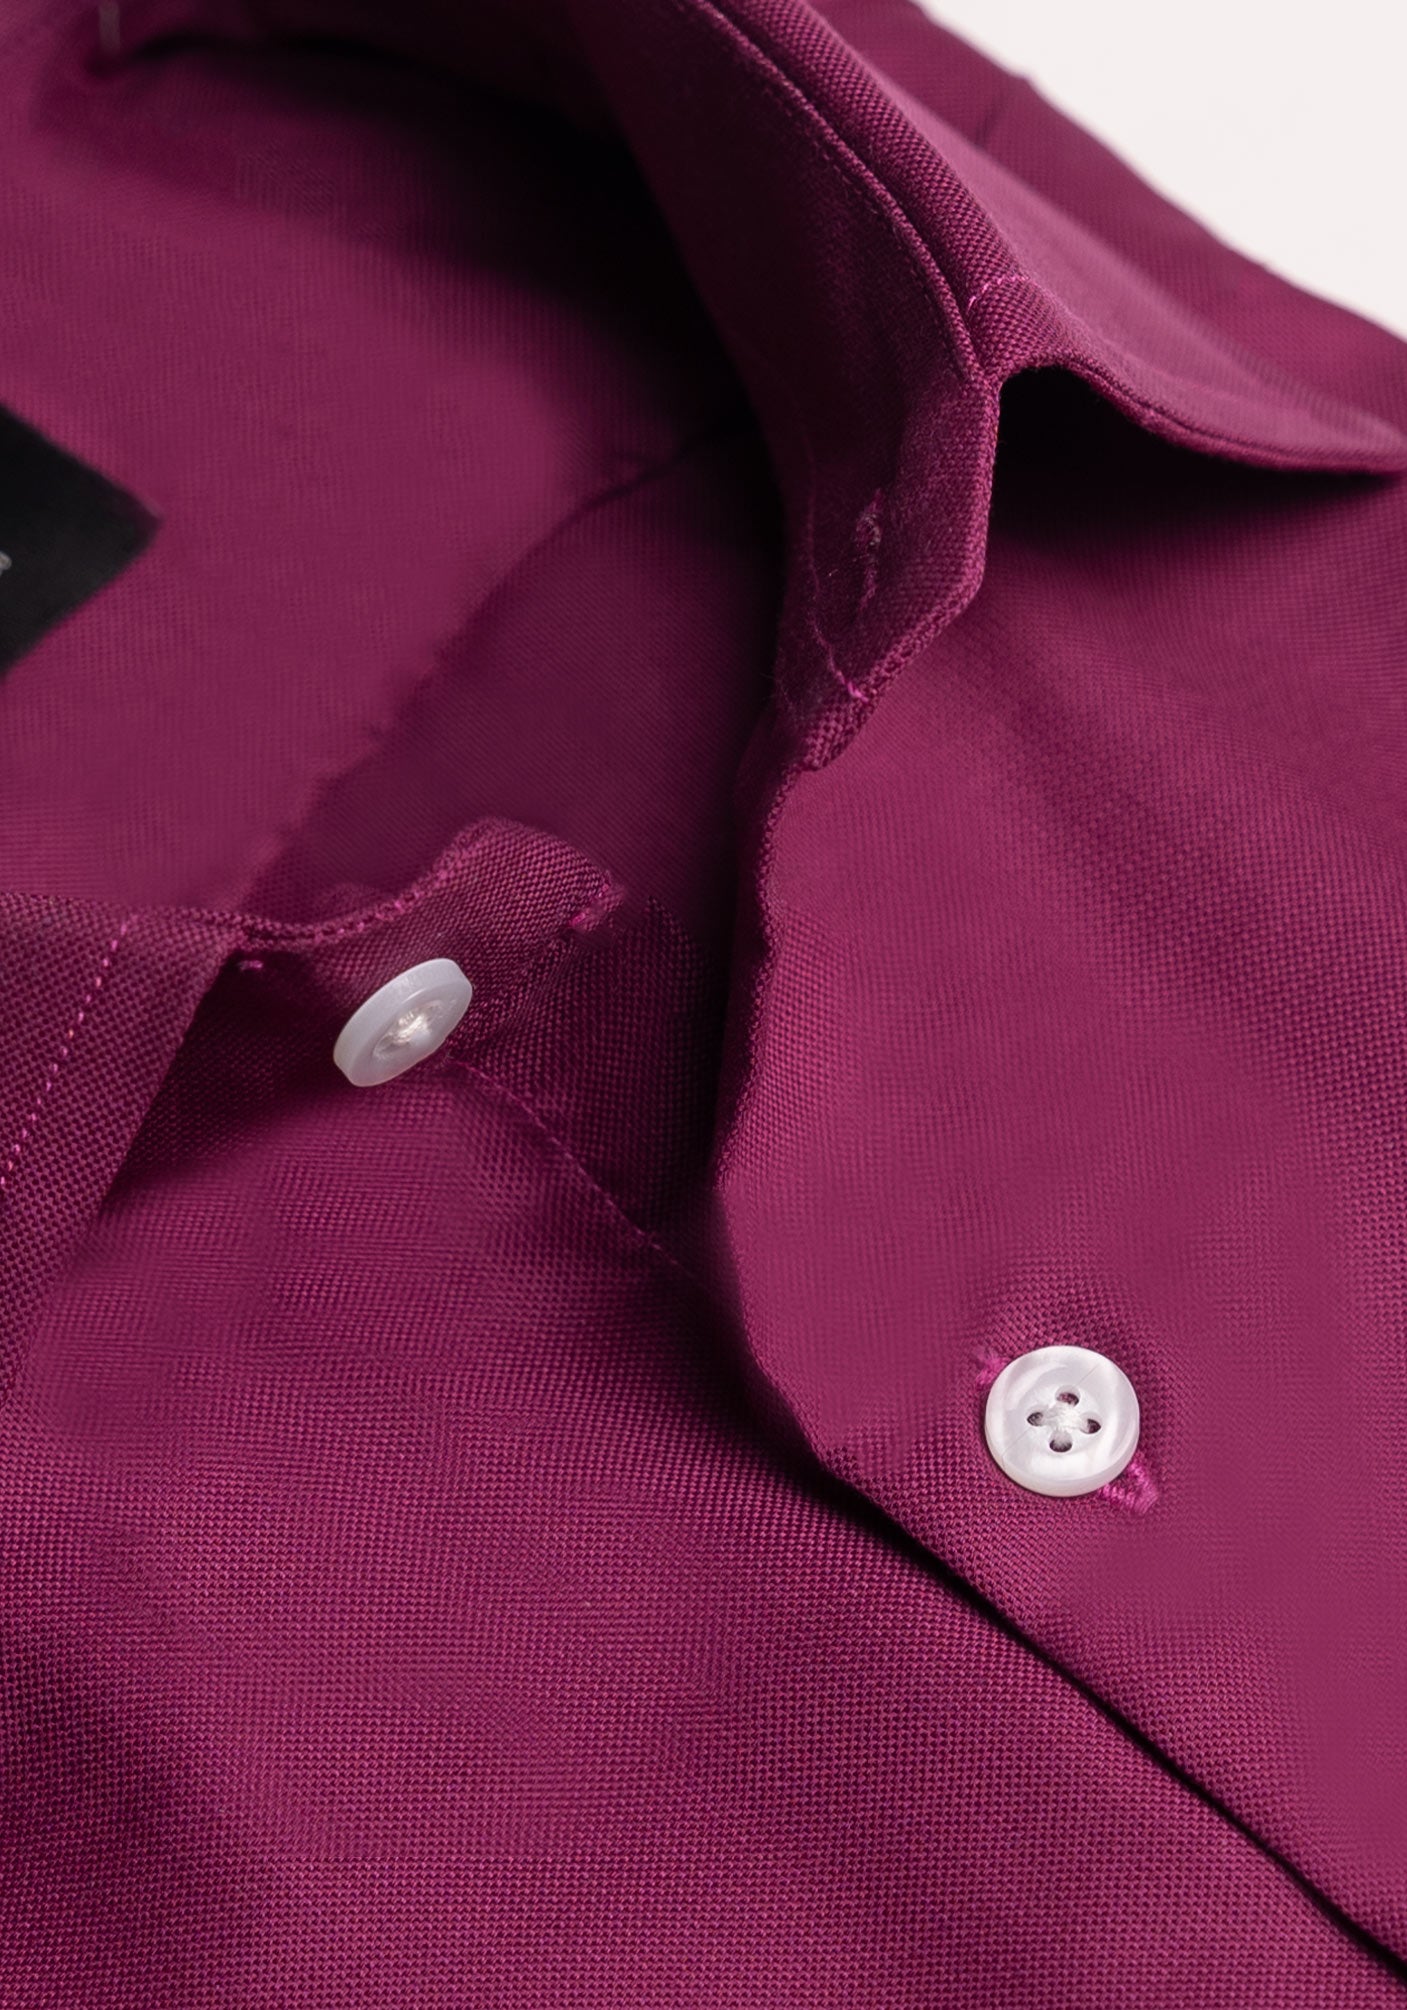 Egyptian Deep Magenta Crisp Pinpoint Shirt - Wrinkle Resistant